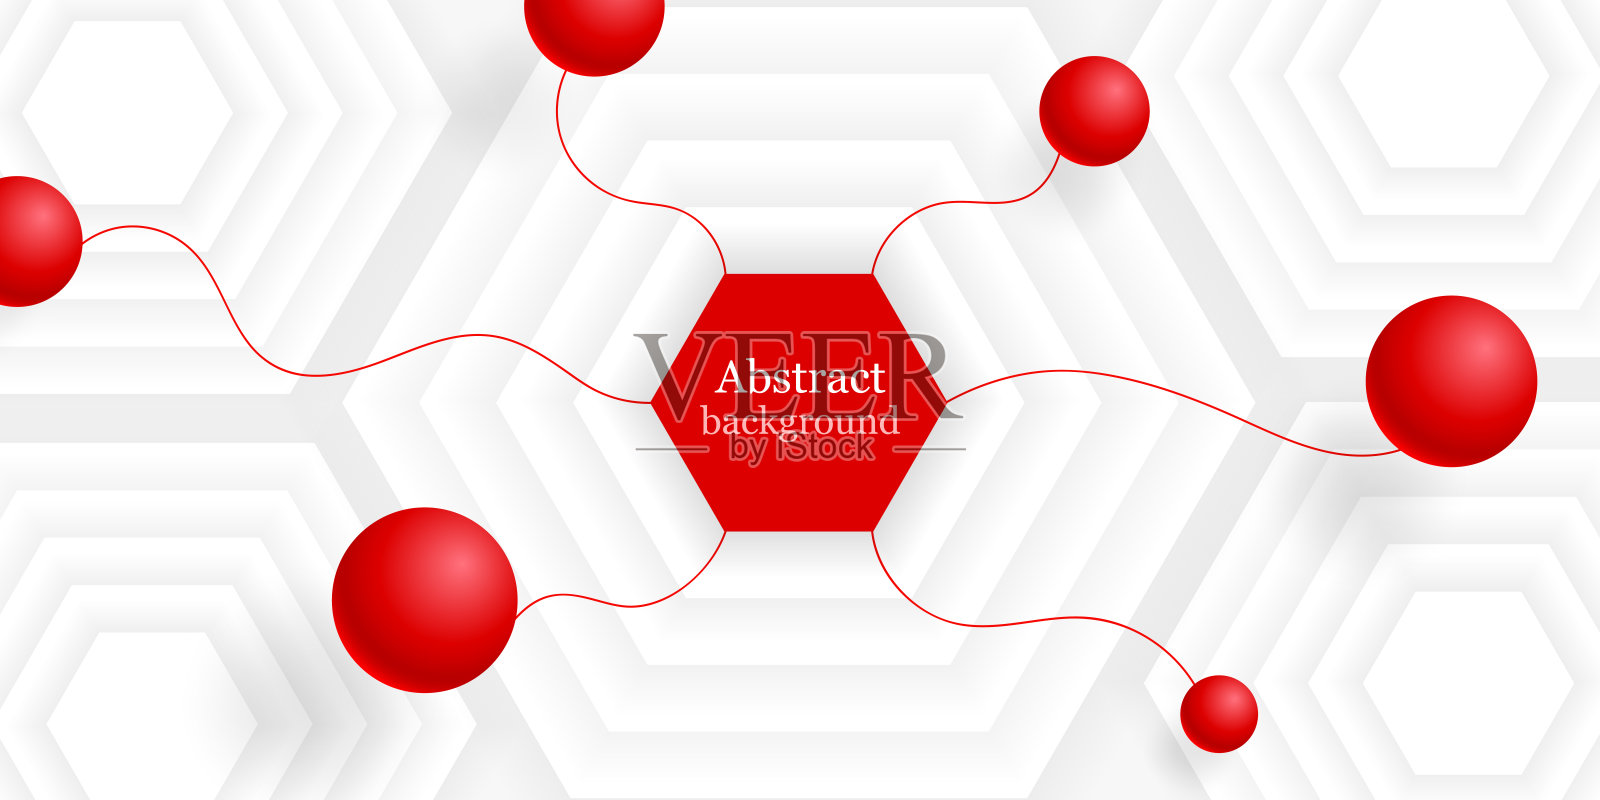 Аbstract背景3 d。六边形和动态的红色球体在白色的背景上。插画图片素材